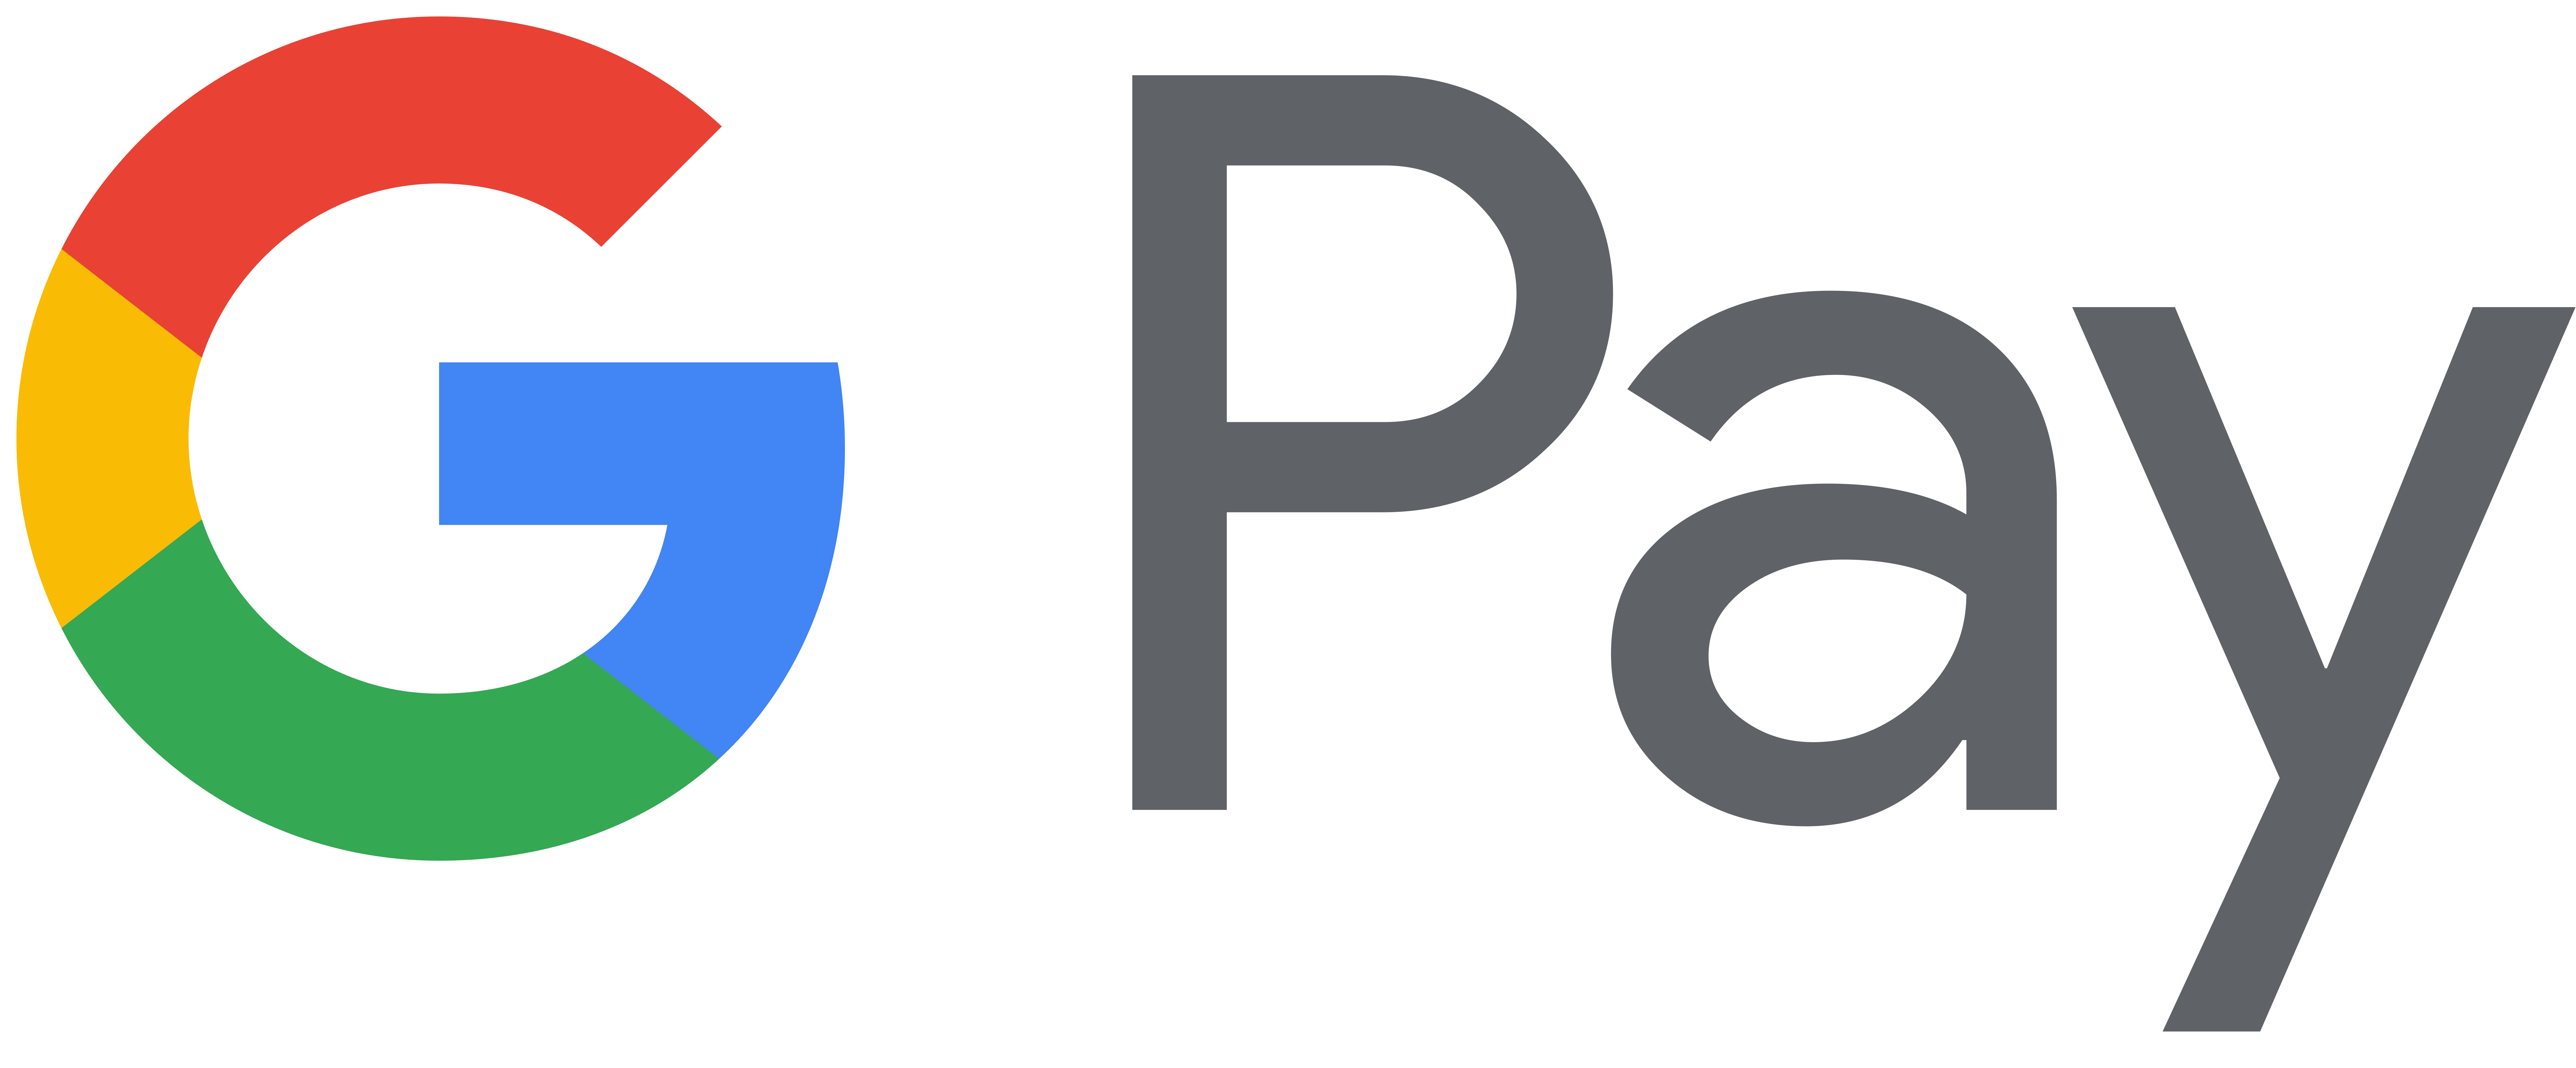 Google Pay (GPay) Logo PNG Image - PurePNG | Free ... - Google Logo Transparent Background